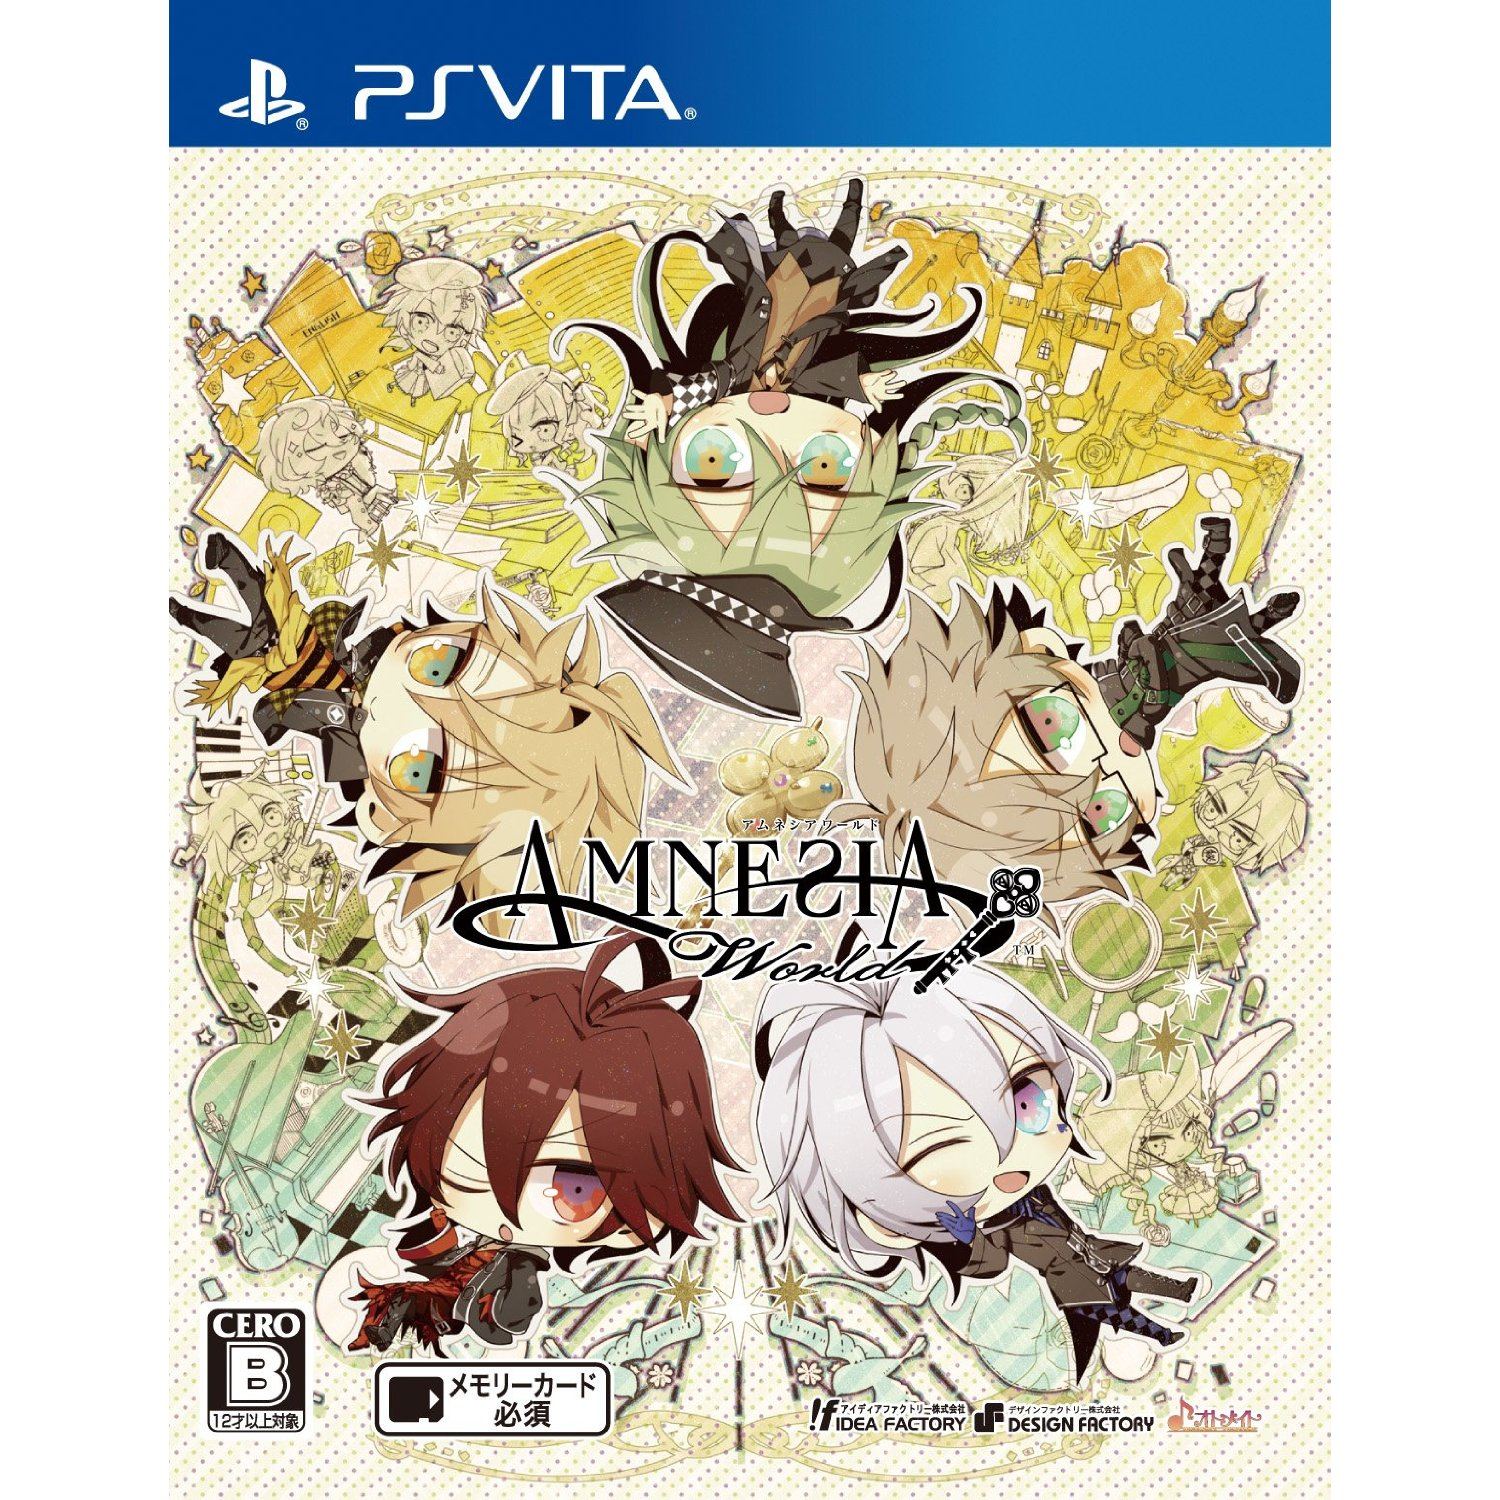 Amnesia World for PlayStation Vita